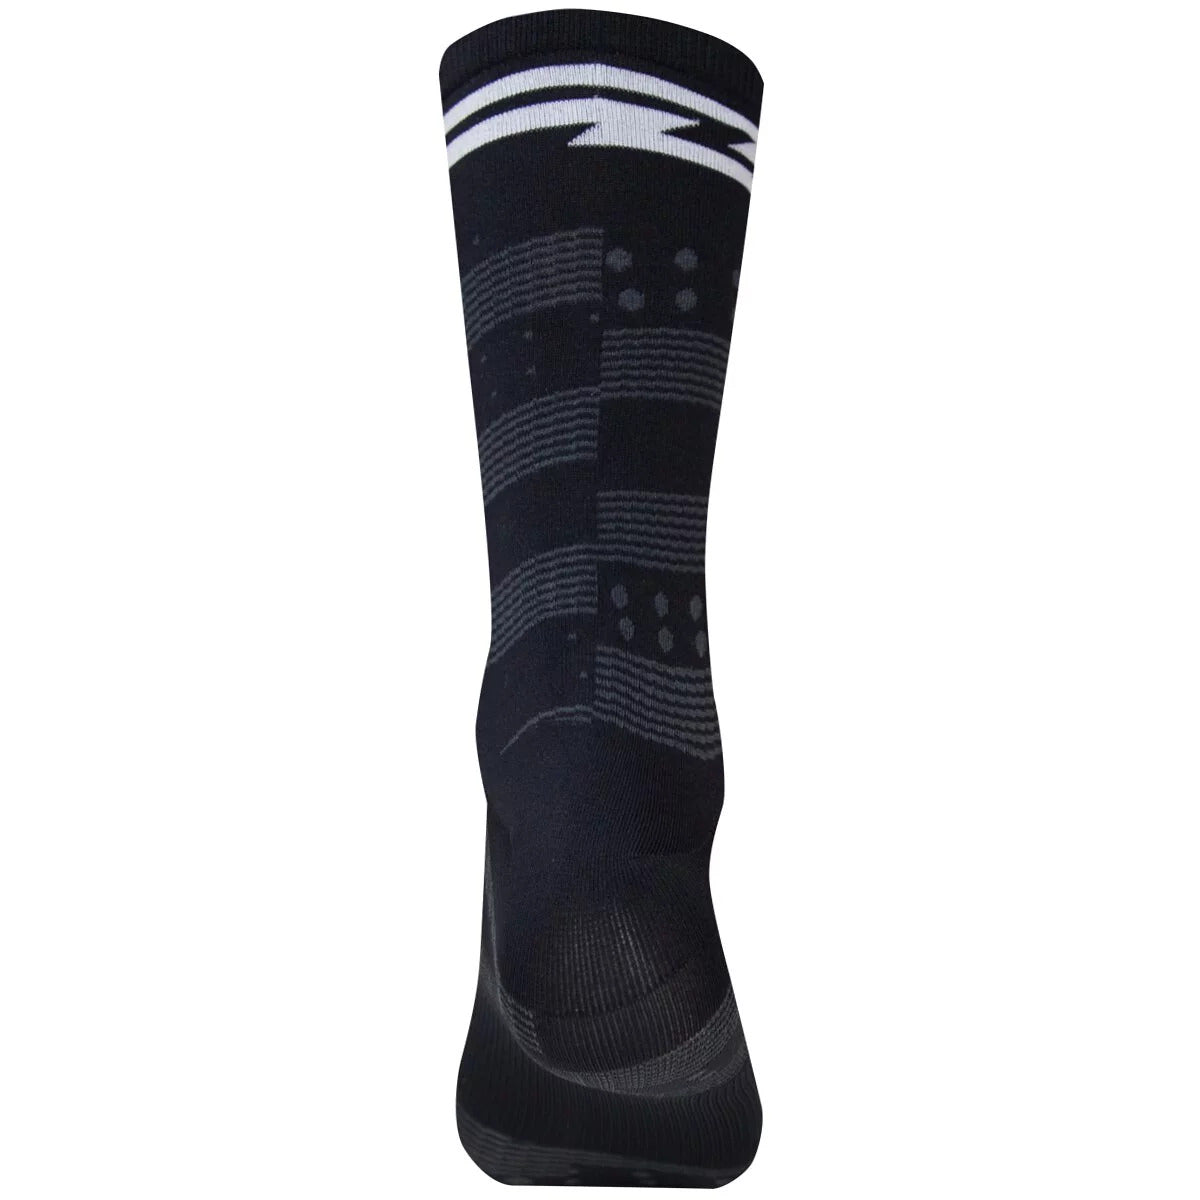 Baisky Premium Cycling Socks - TRSS129 Purity Black